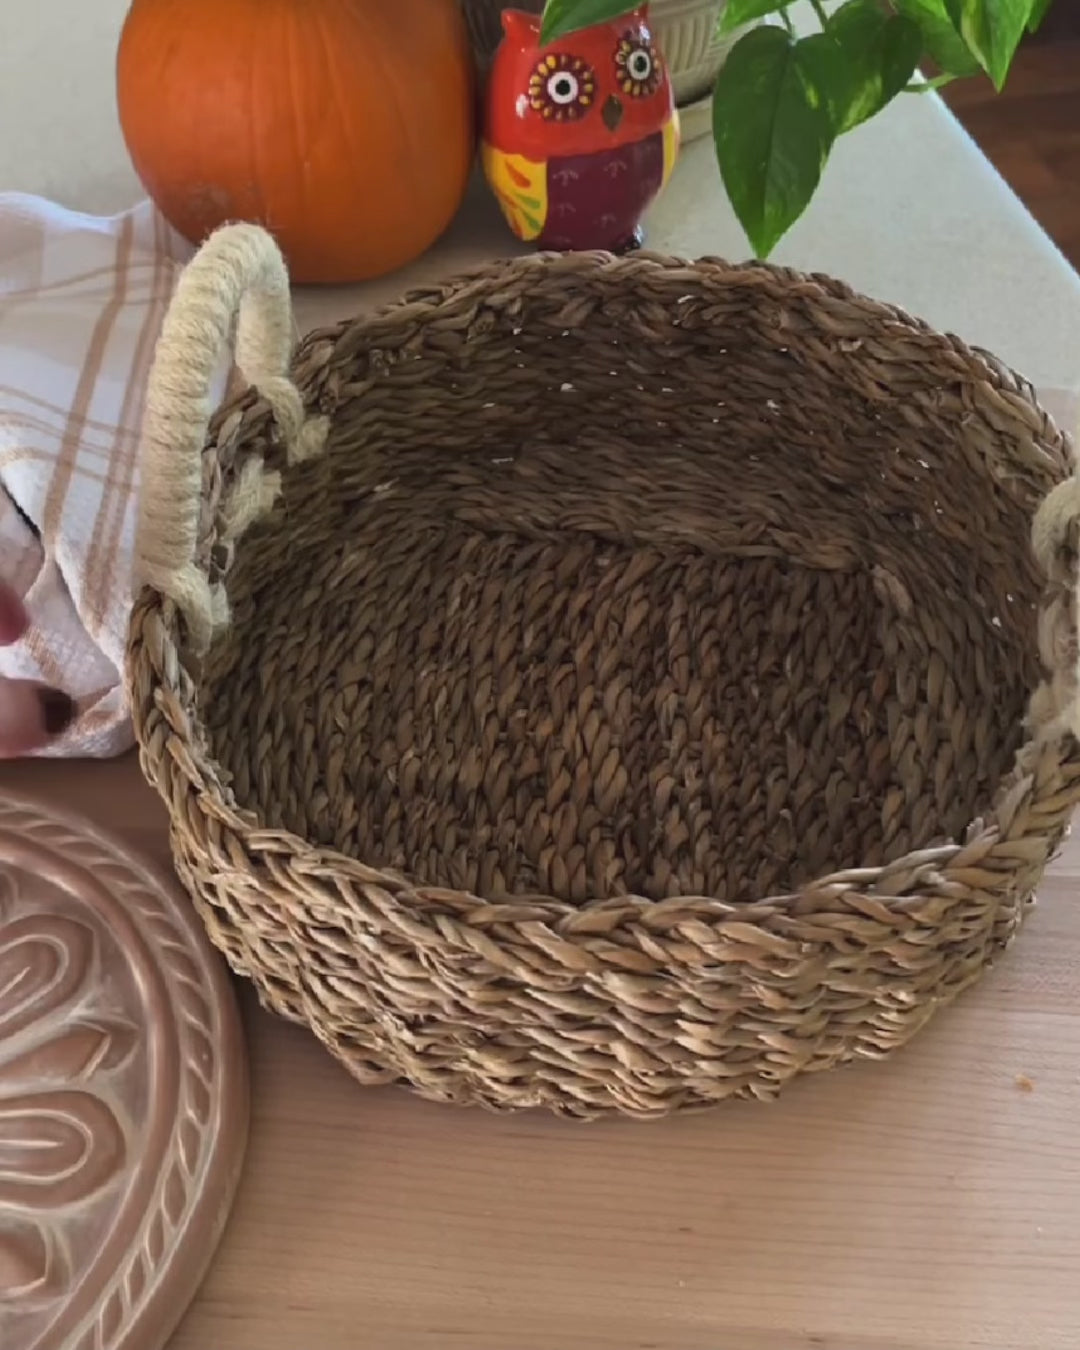 Handmade Bread Warmer & Wicker Basket - Flower Serving Accessories